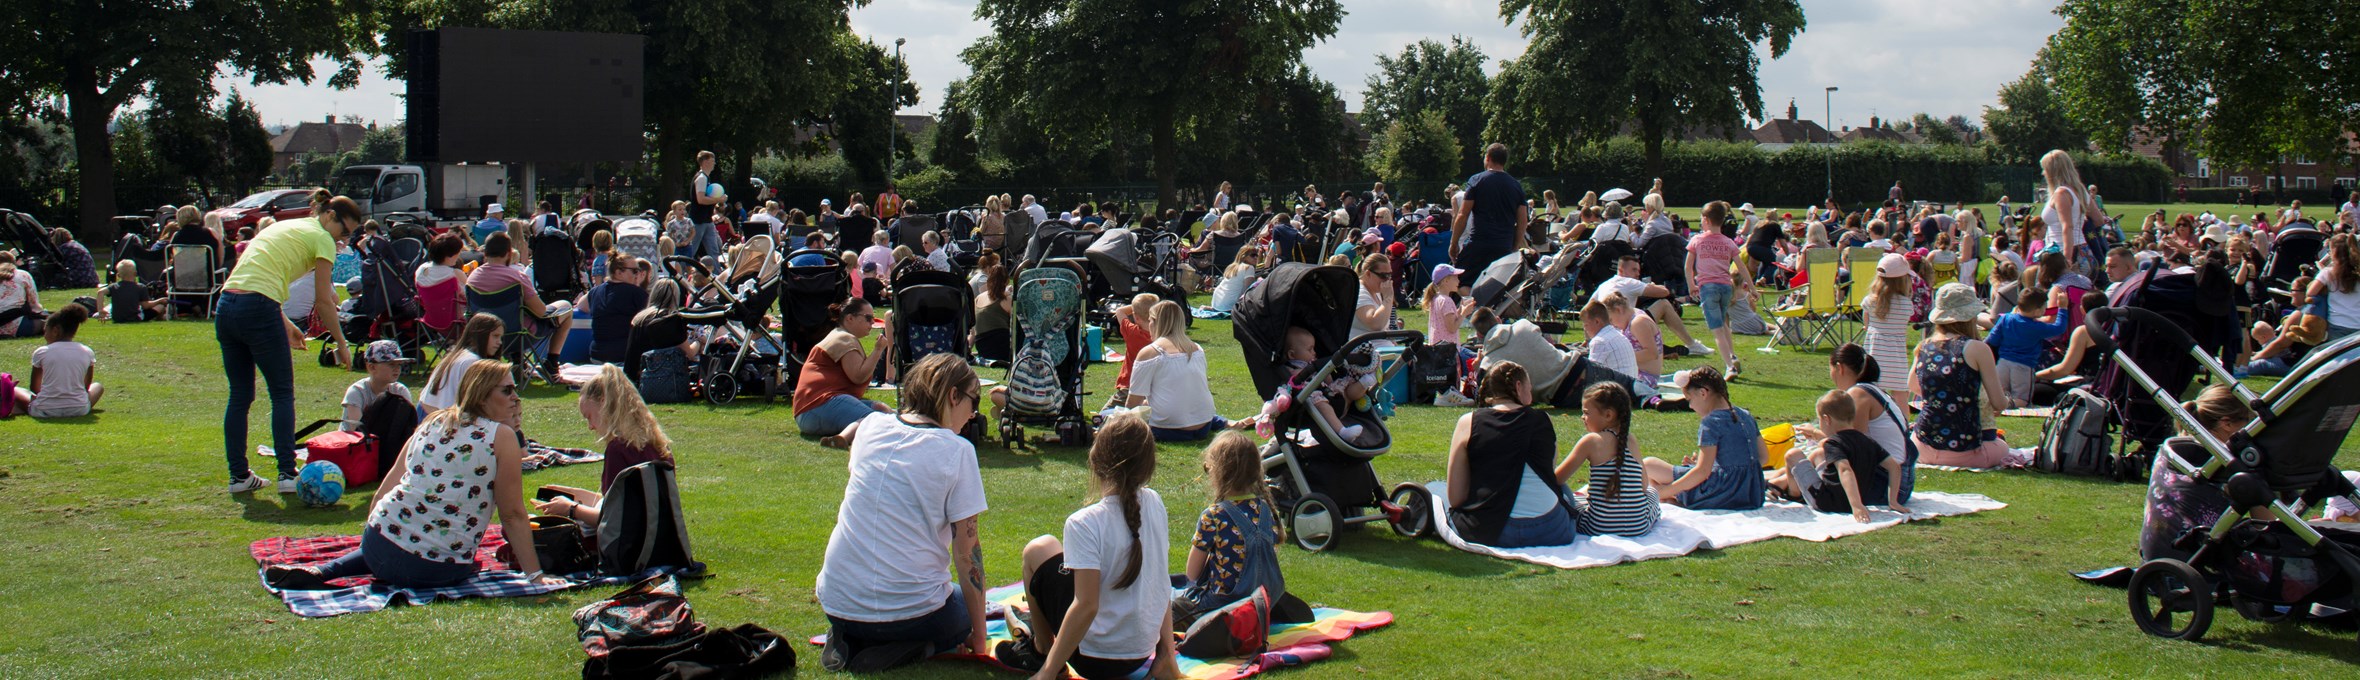 Crowds enjoying an event on Titchfield Park 